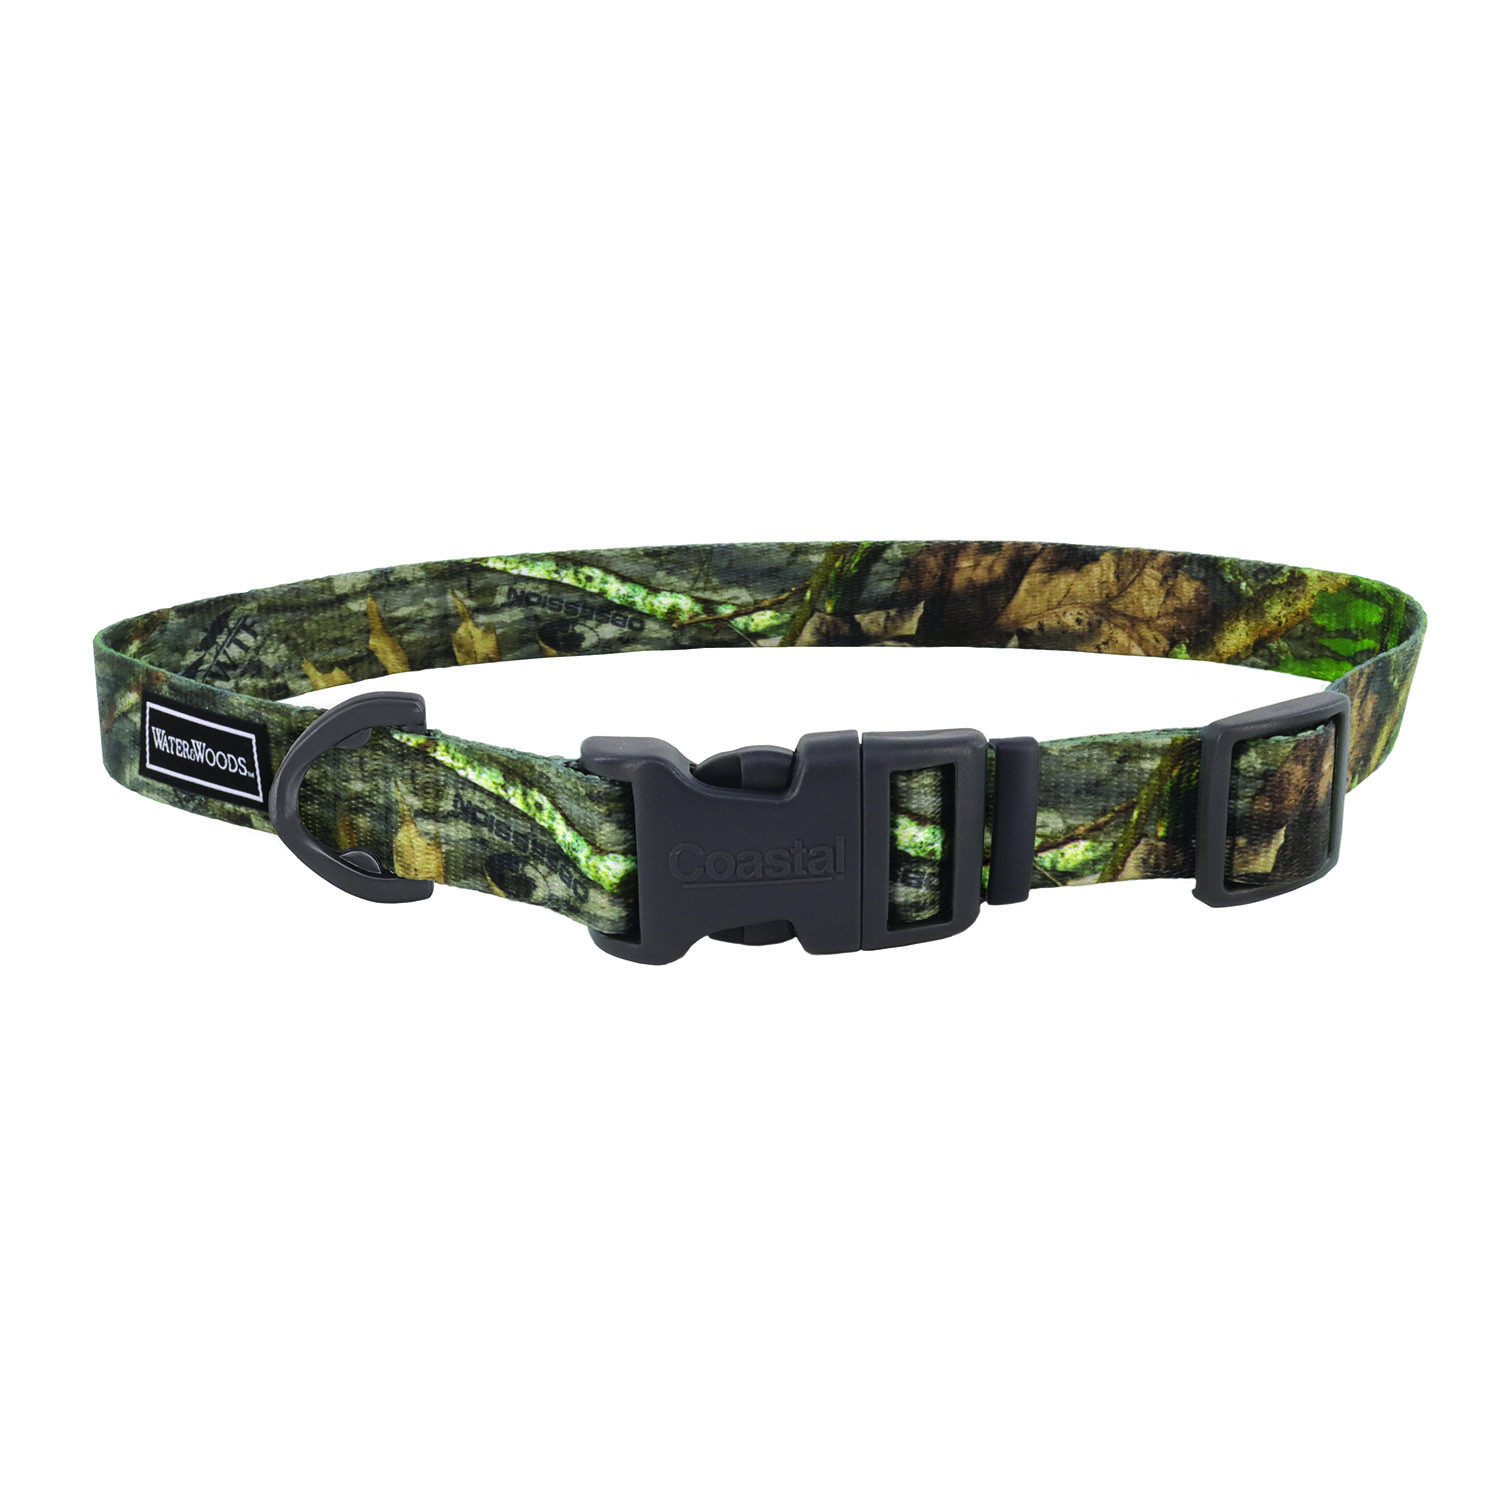 Water & Woods® Adjustable Dog Collar